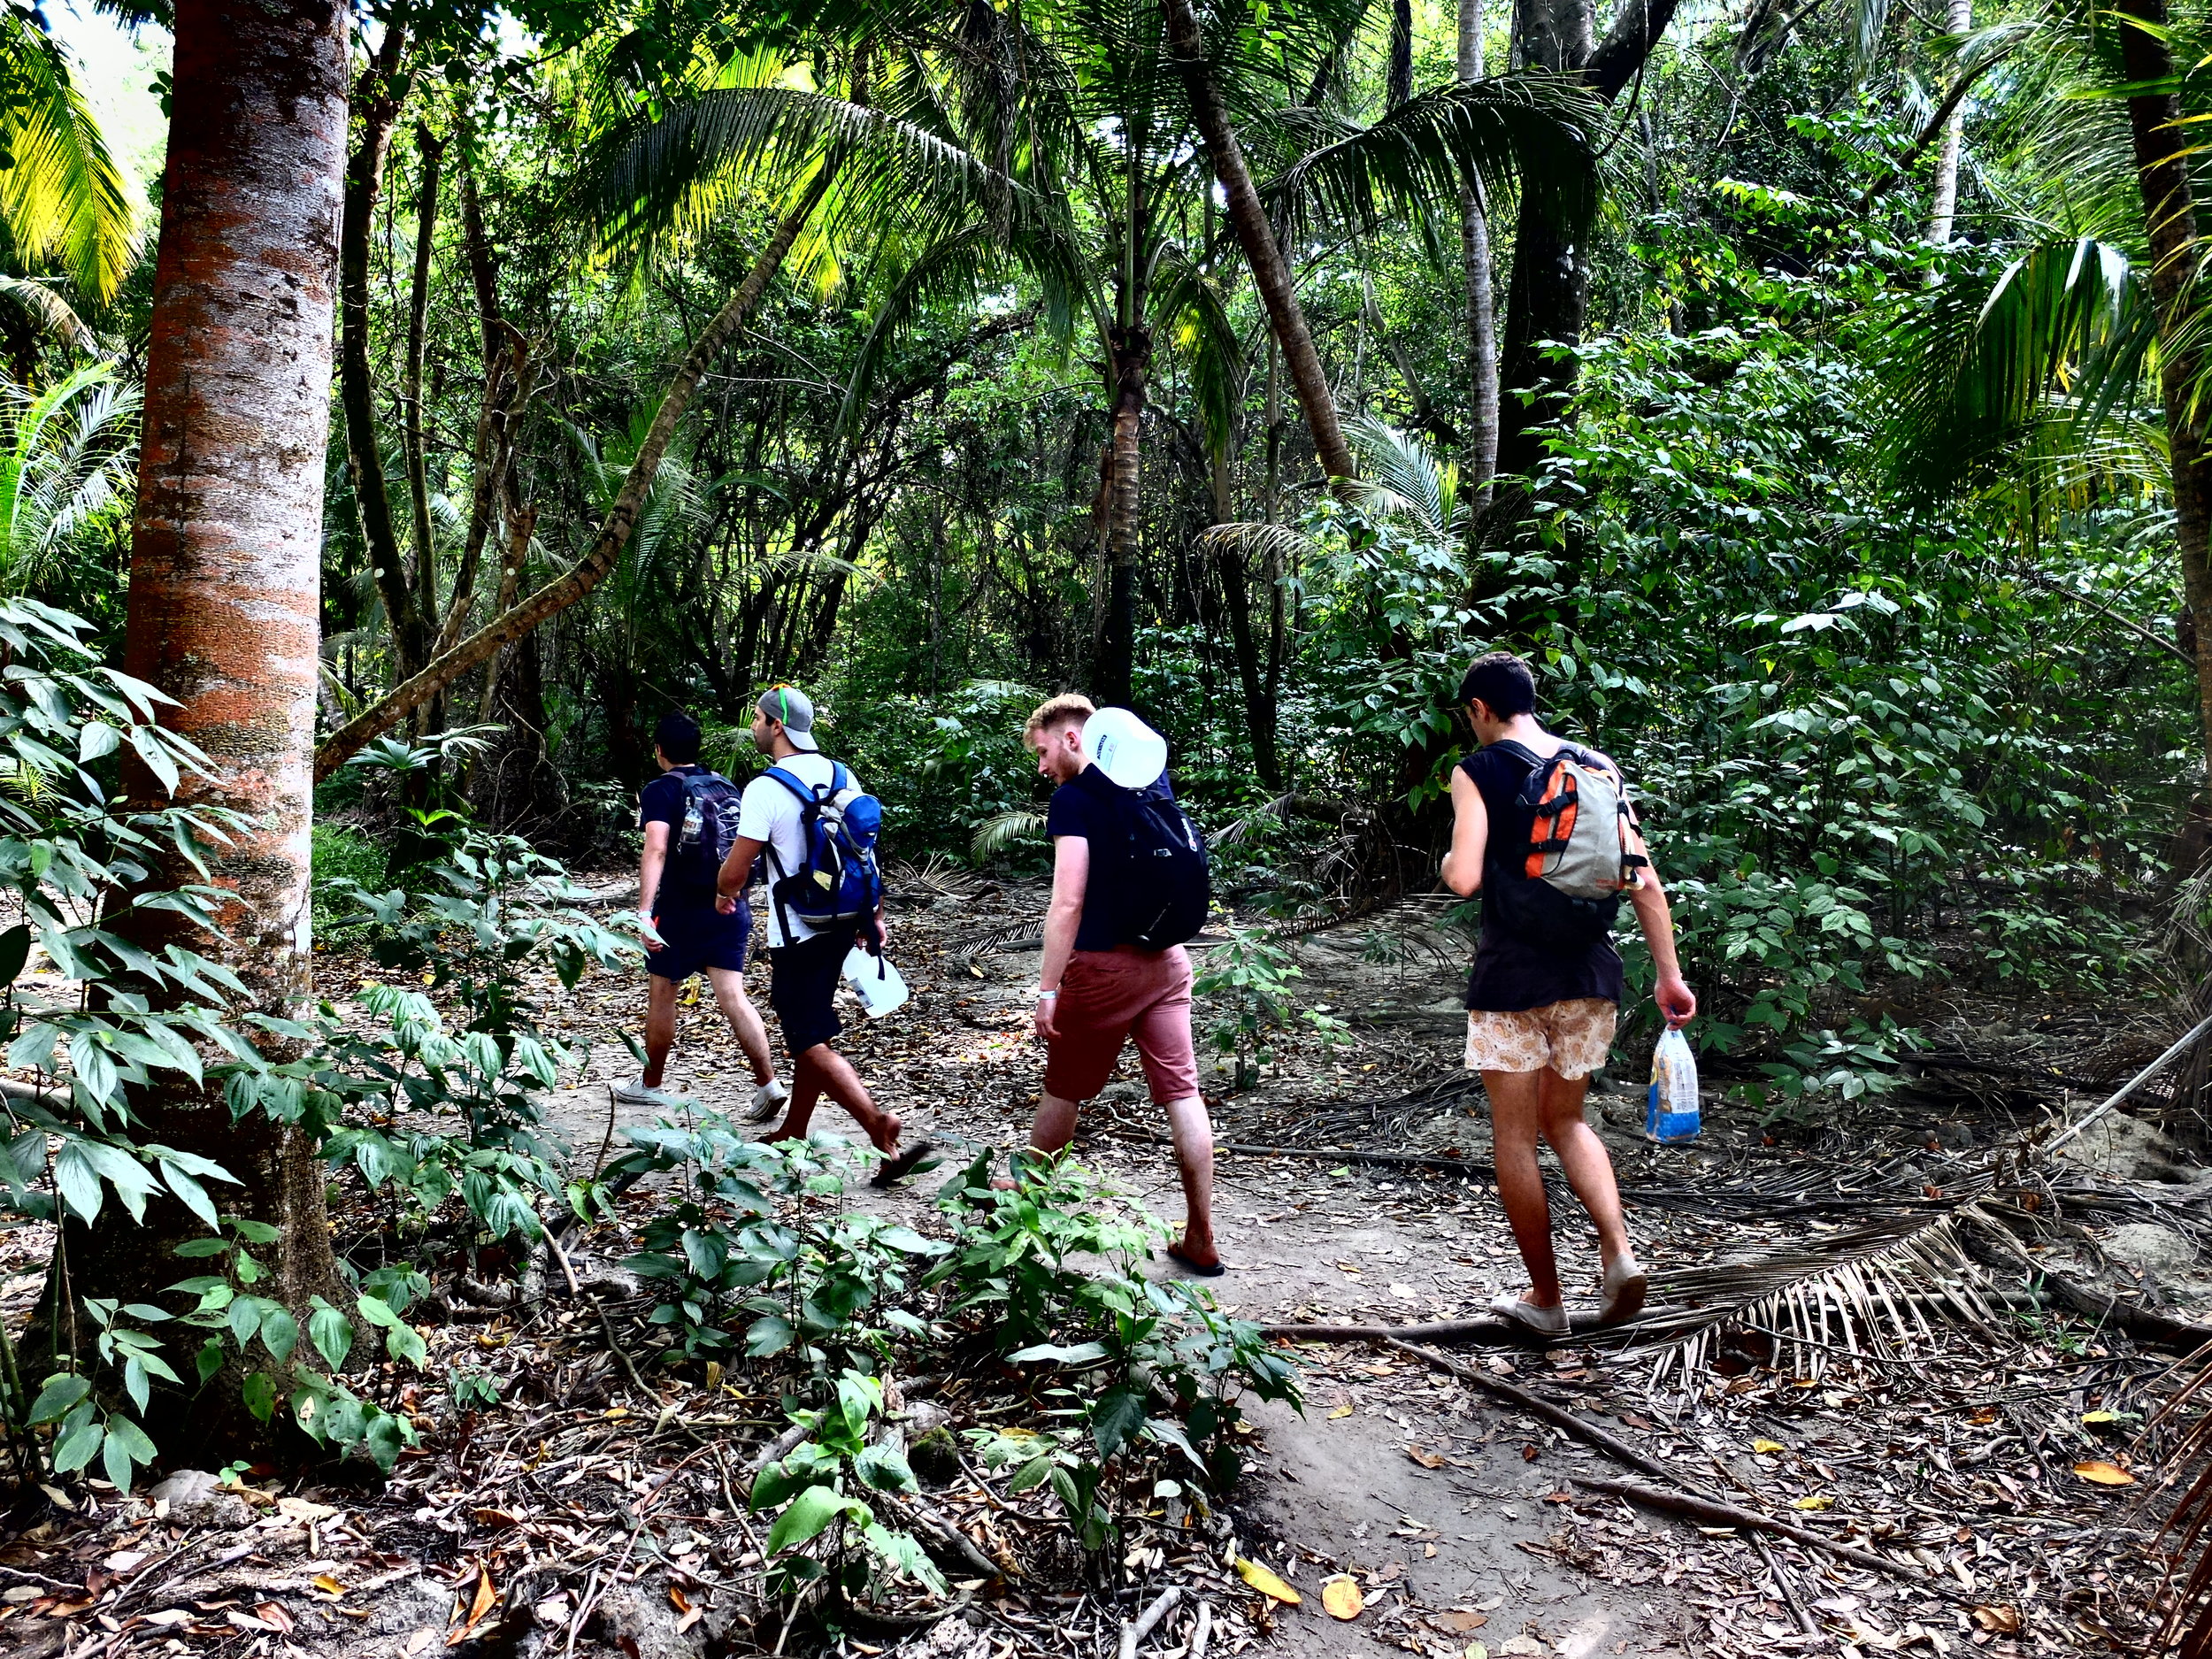 The crew trekking through the jungle